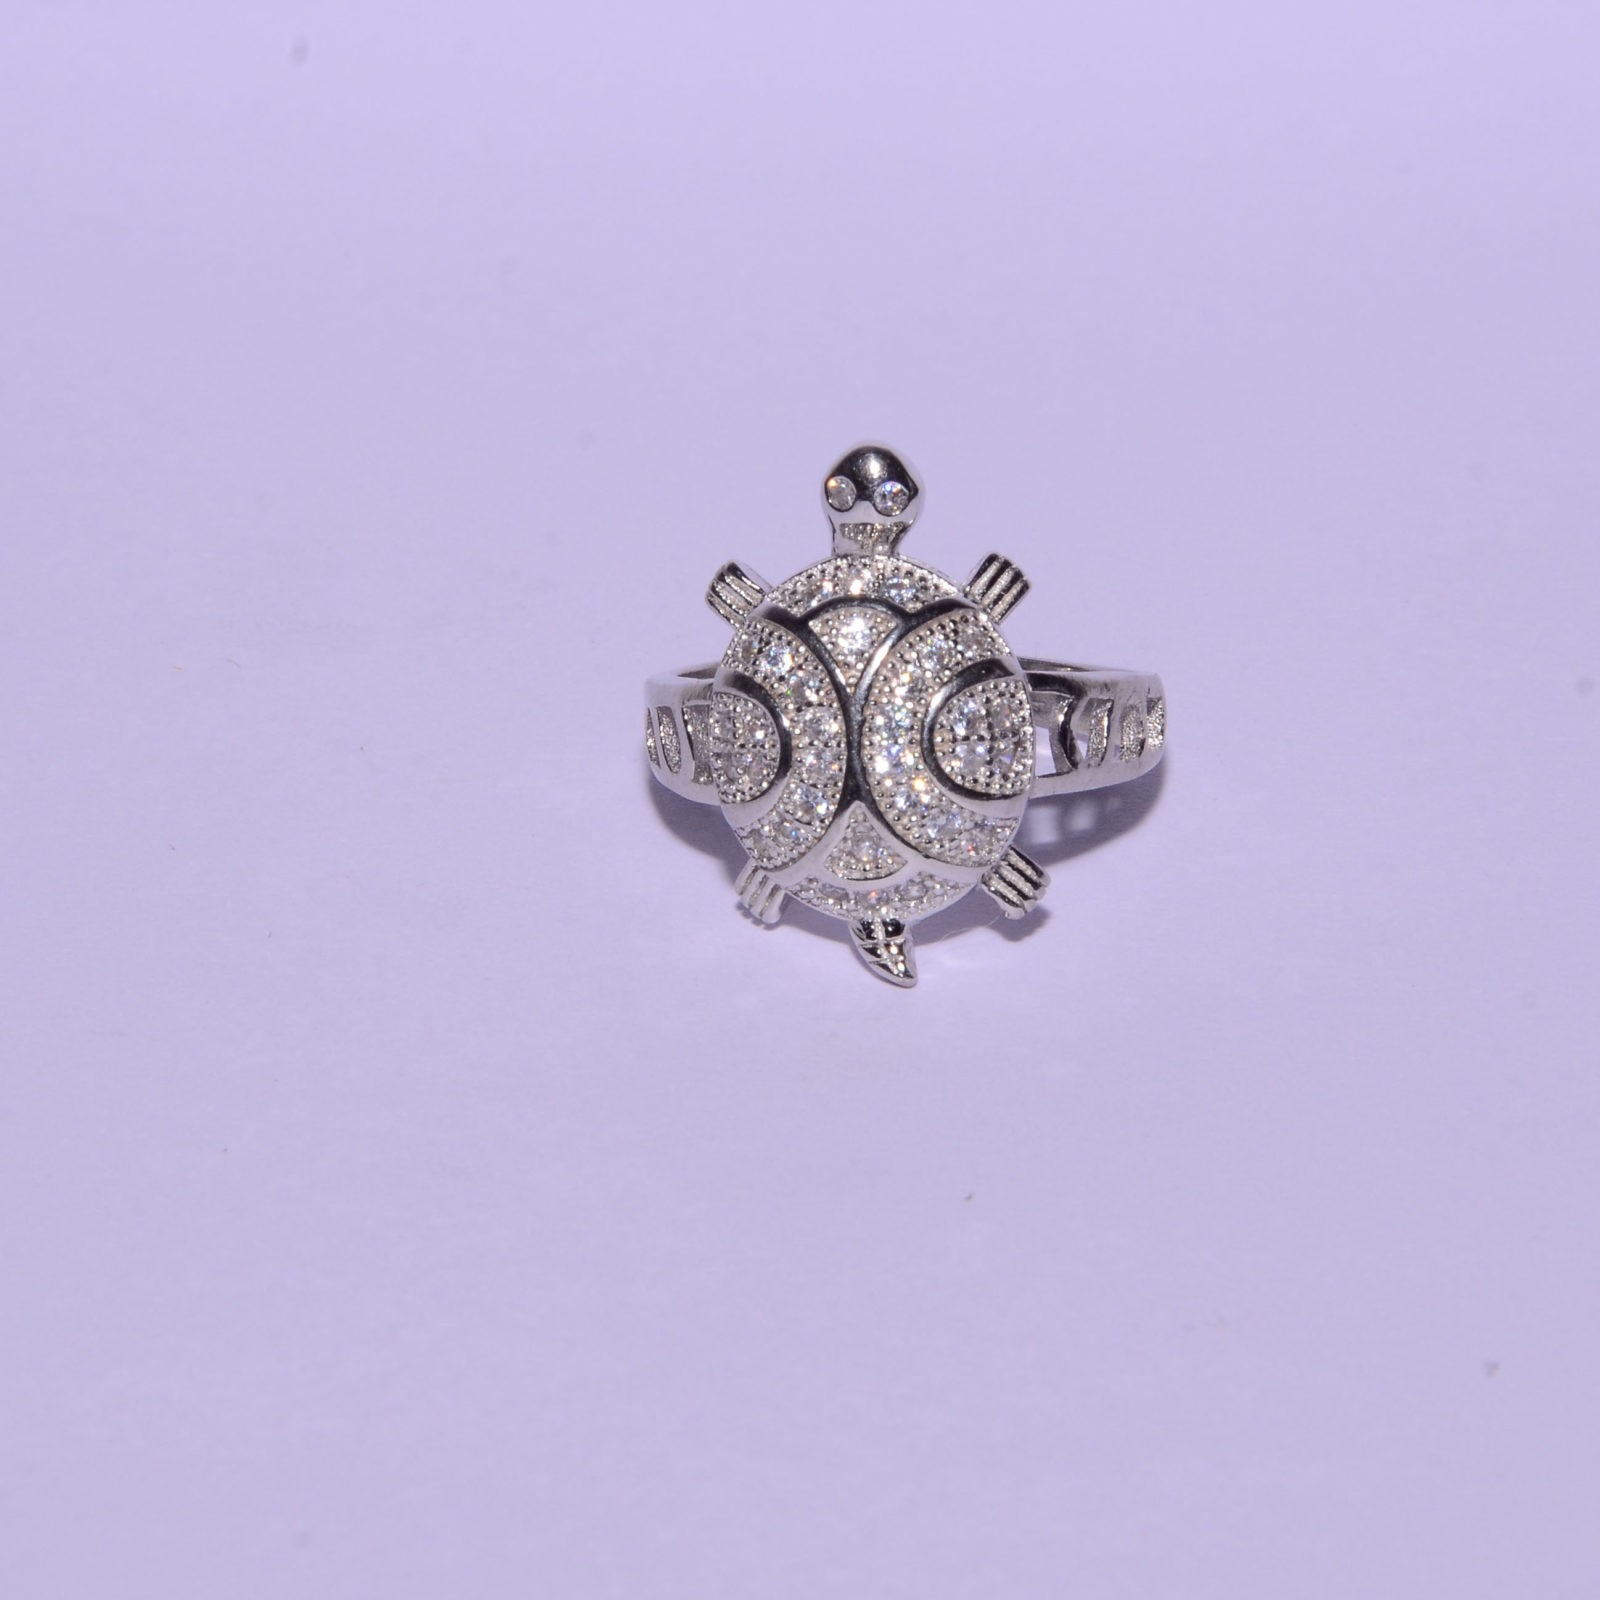 Silver Tortoise Ring White Diamond | 925 Silver Kachua Ring